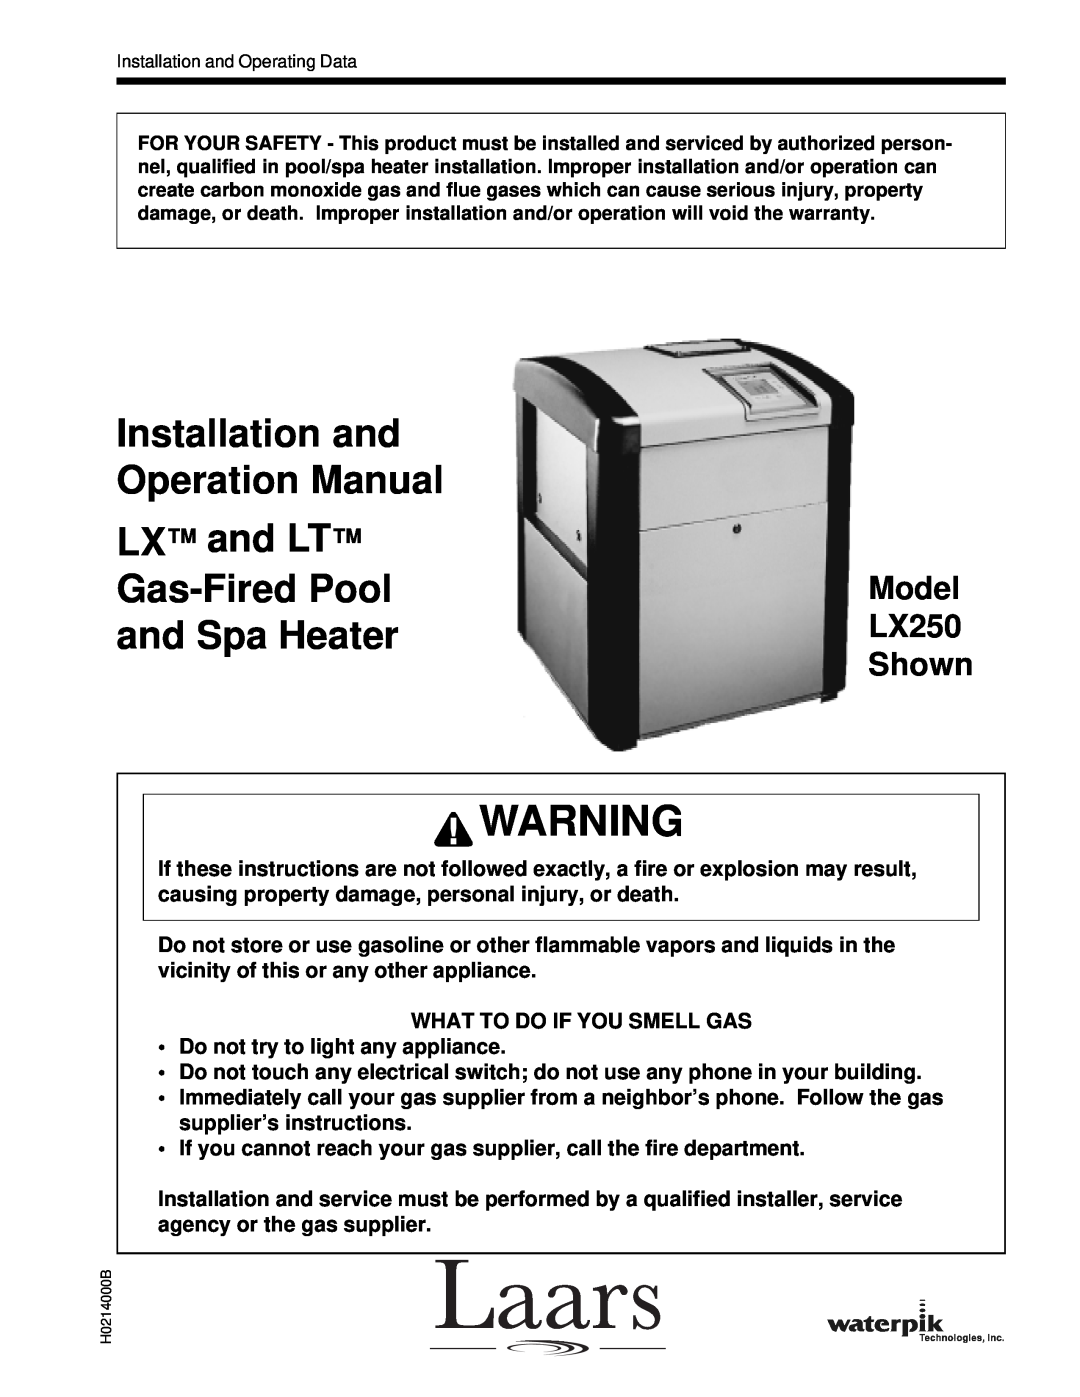 Waterpik Technologies pool/spa heater warranty LX and LT, Gas-FiredPool, and Spa Heater, Model, LX250, Shown 